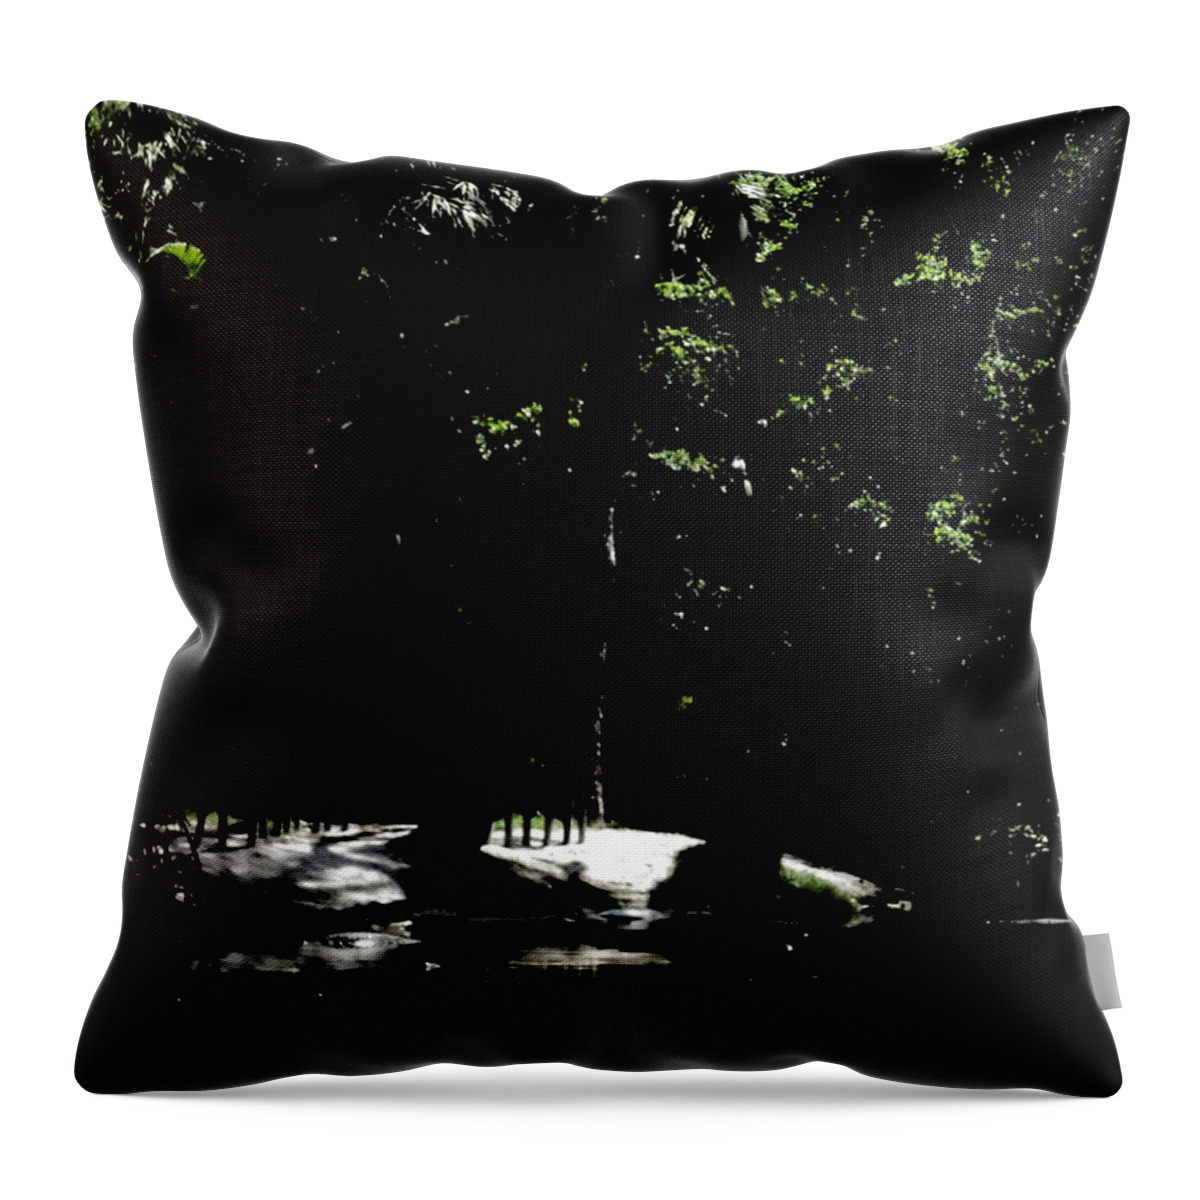 Nature Throw Pillow featuring the photograph Black by Oksana Semenchenko